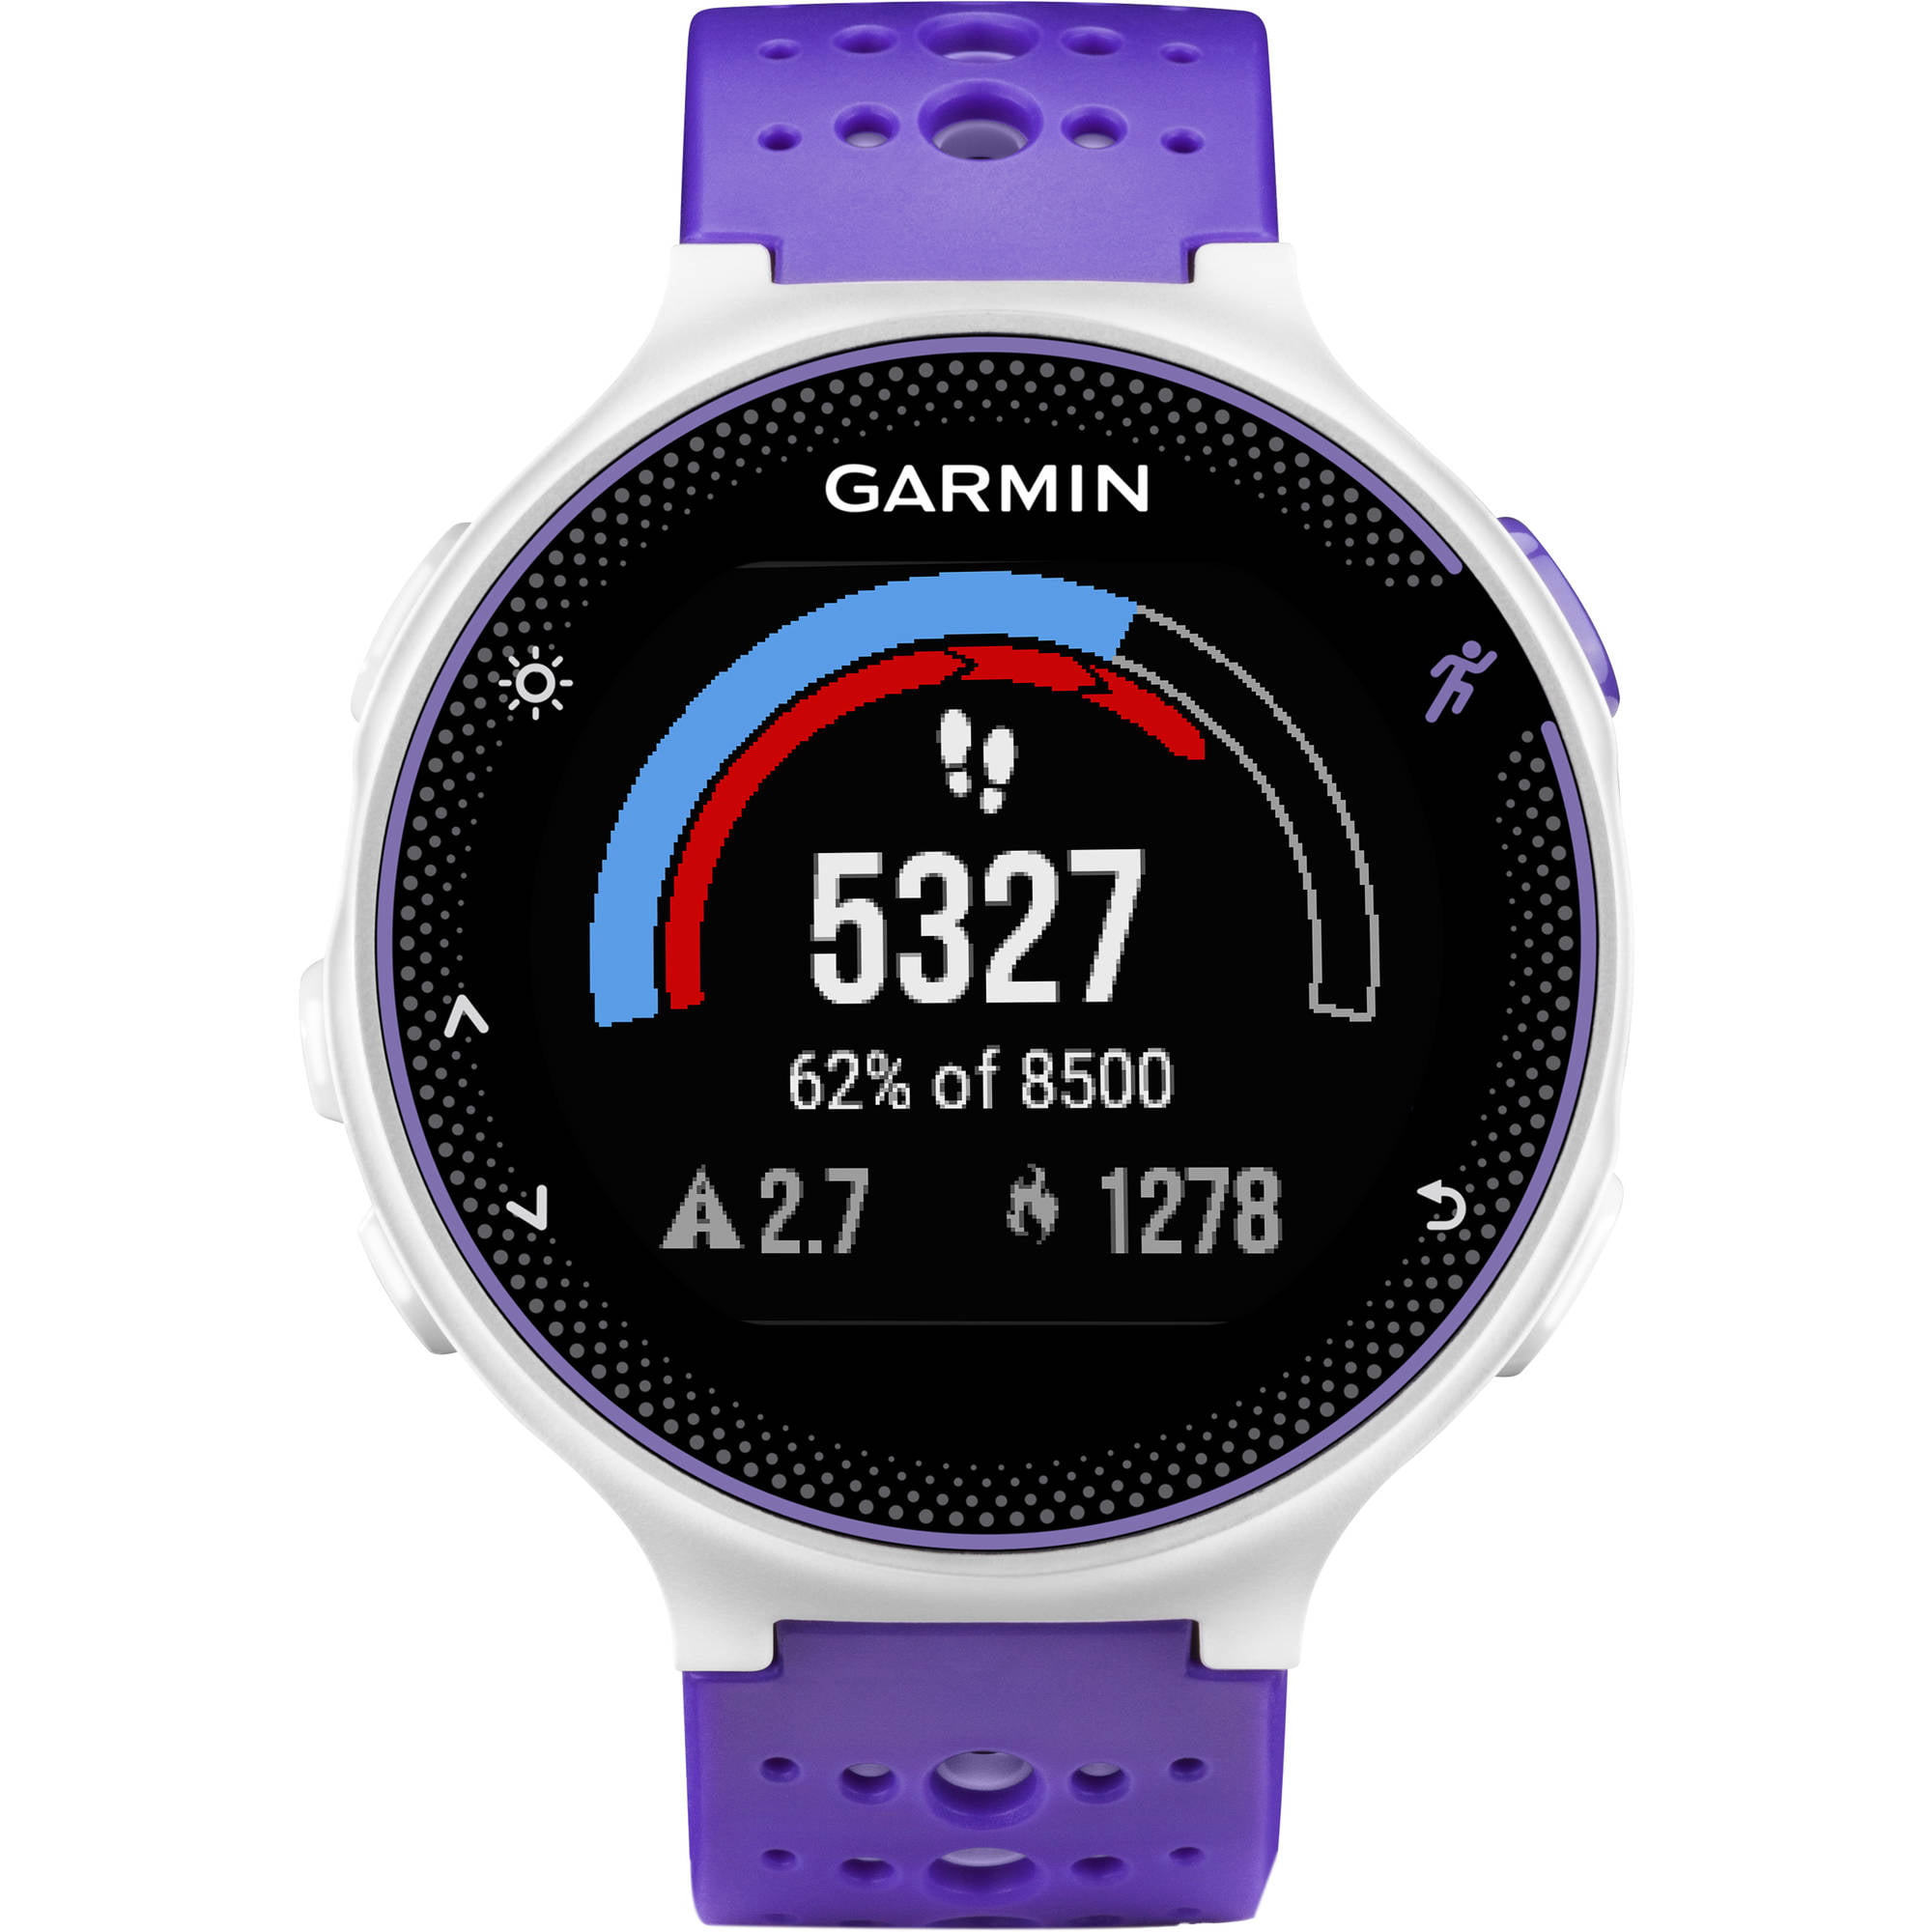 Garmin GPS Watch - Walmart.com